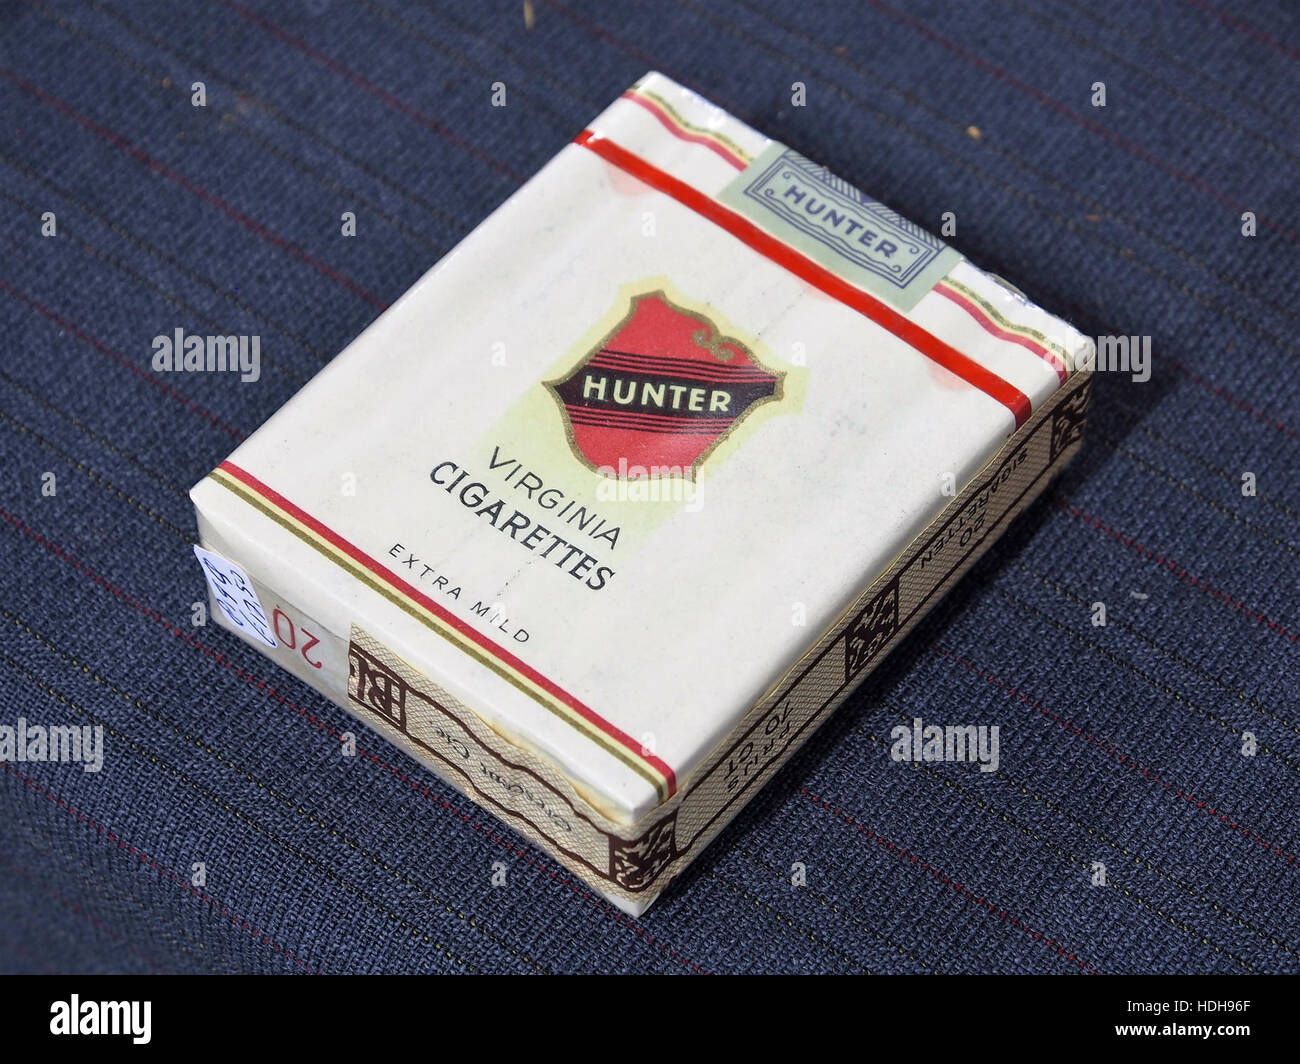 Hunter cigarrillos pack pic2 Foto de stock